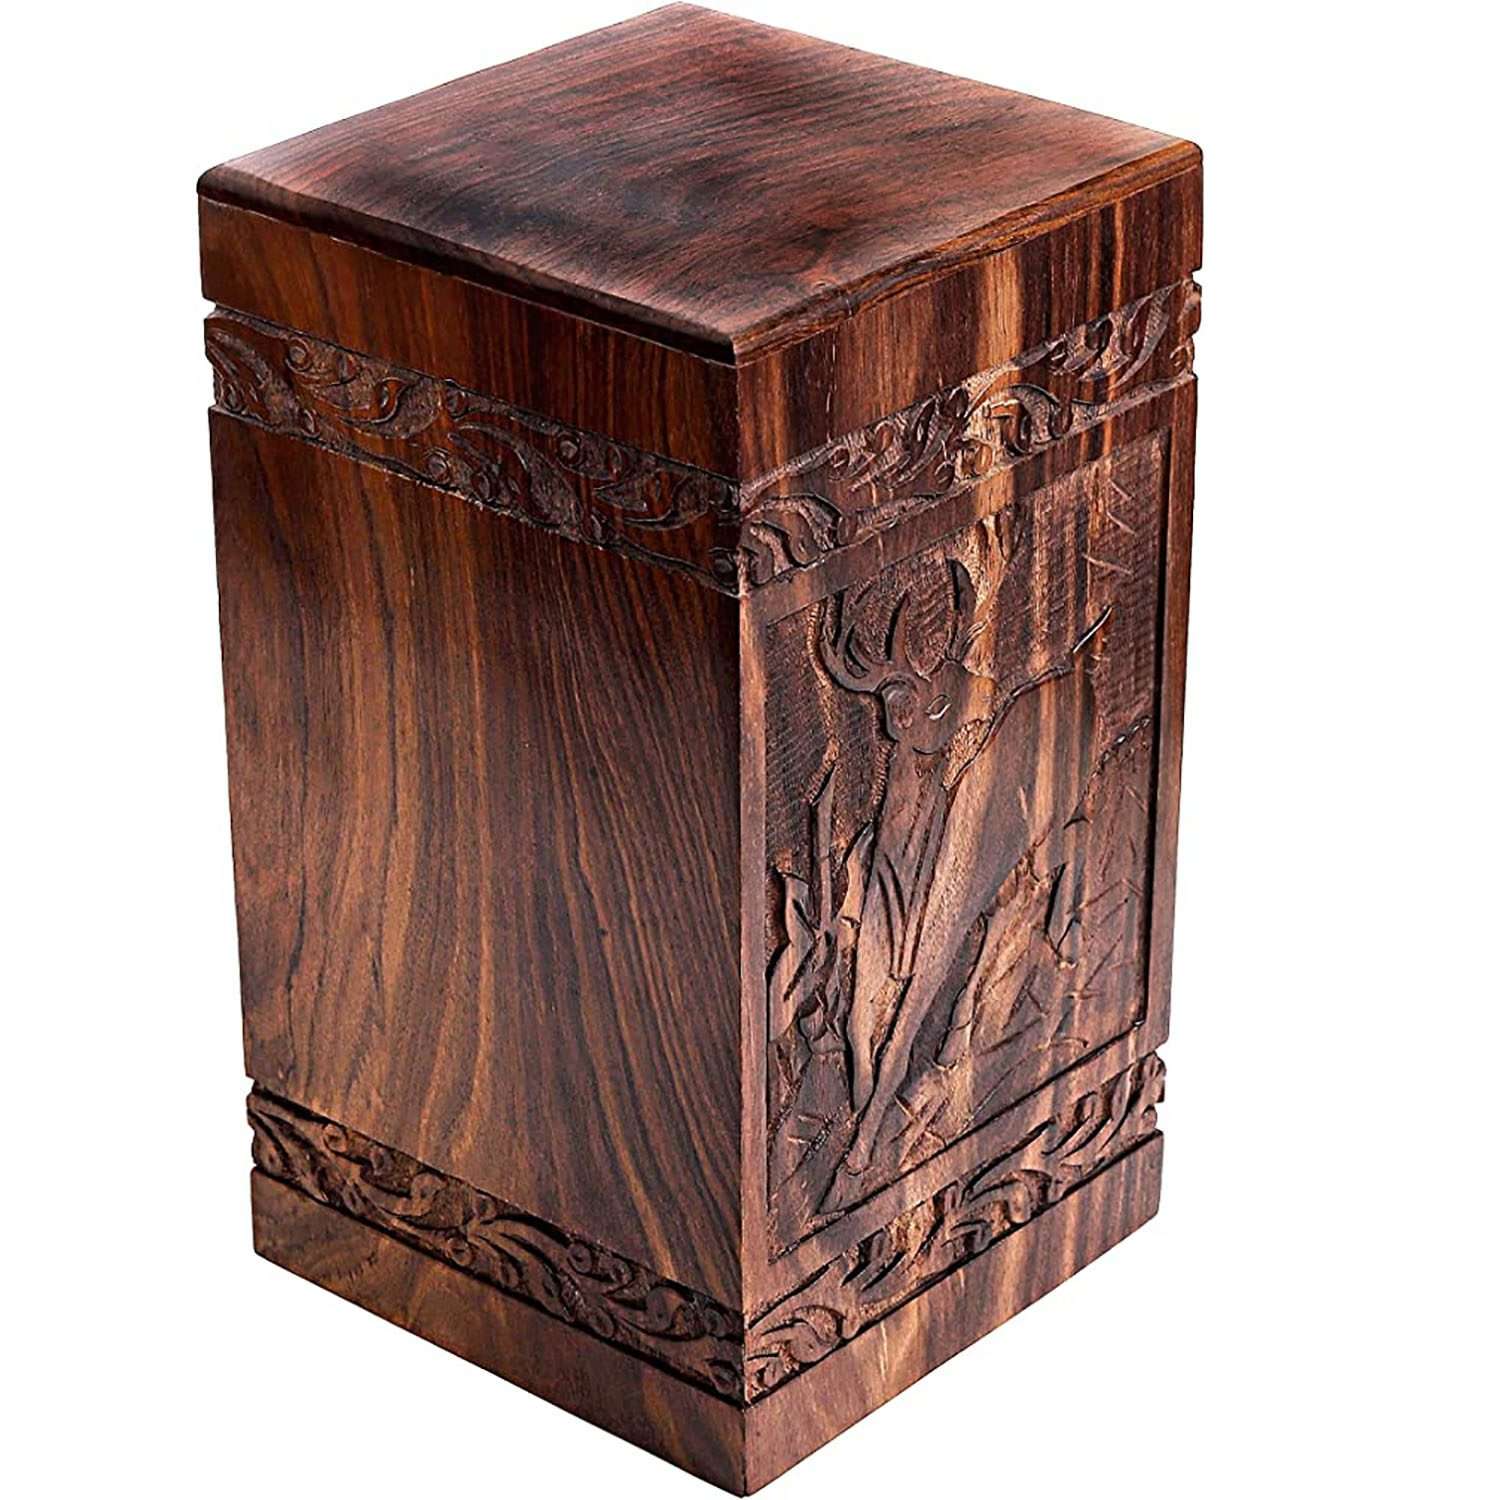 Urn for Human Ashes, Cremation Urn Box with Hand carved floral design, Elegant Wooden Boxes for Urn